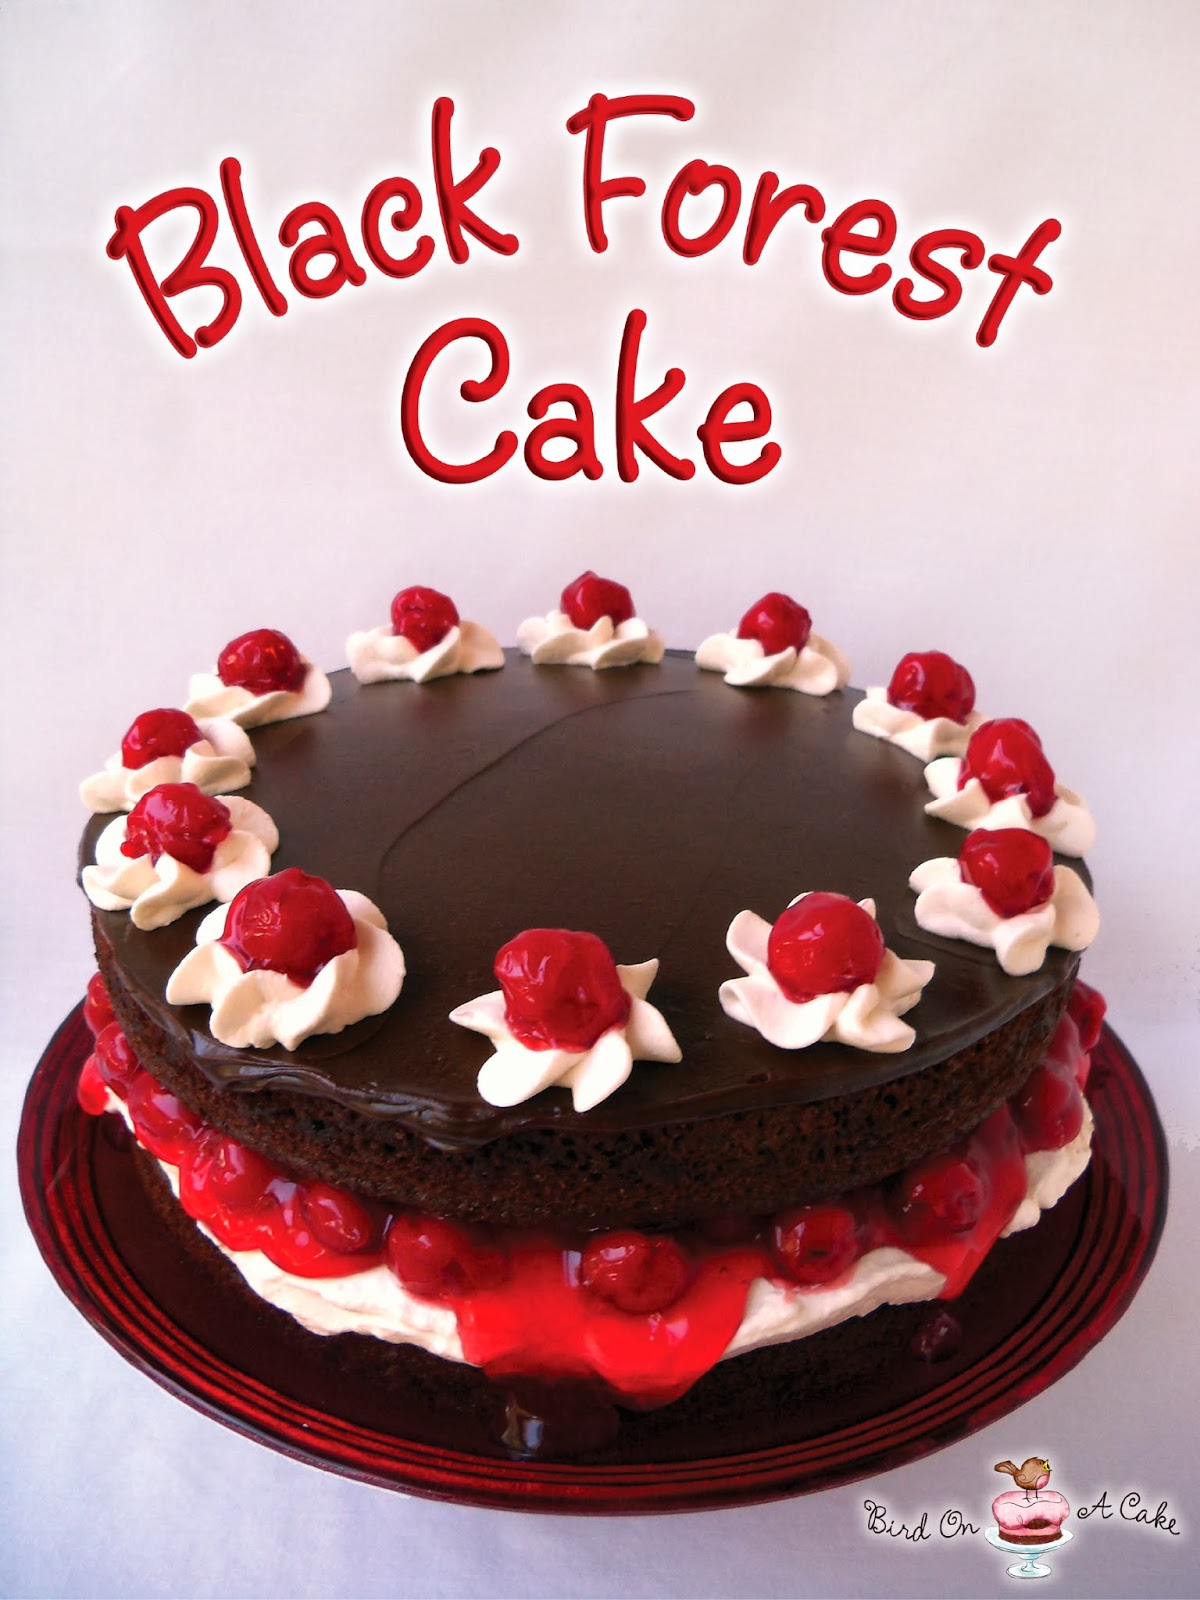 Bird On A Cake: Black Forest Cake with Chocolate Ganache